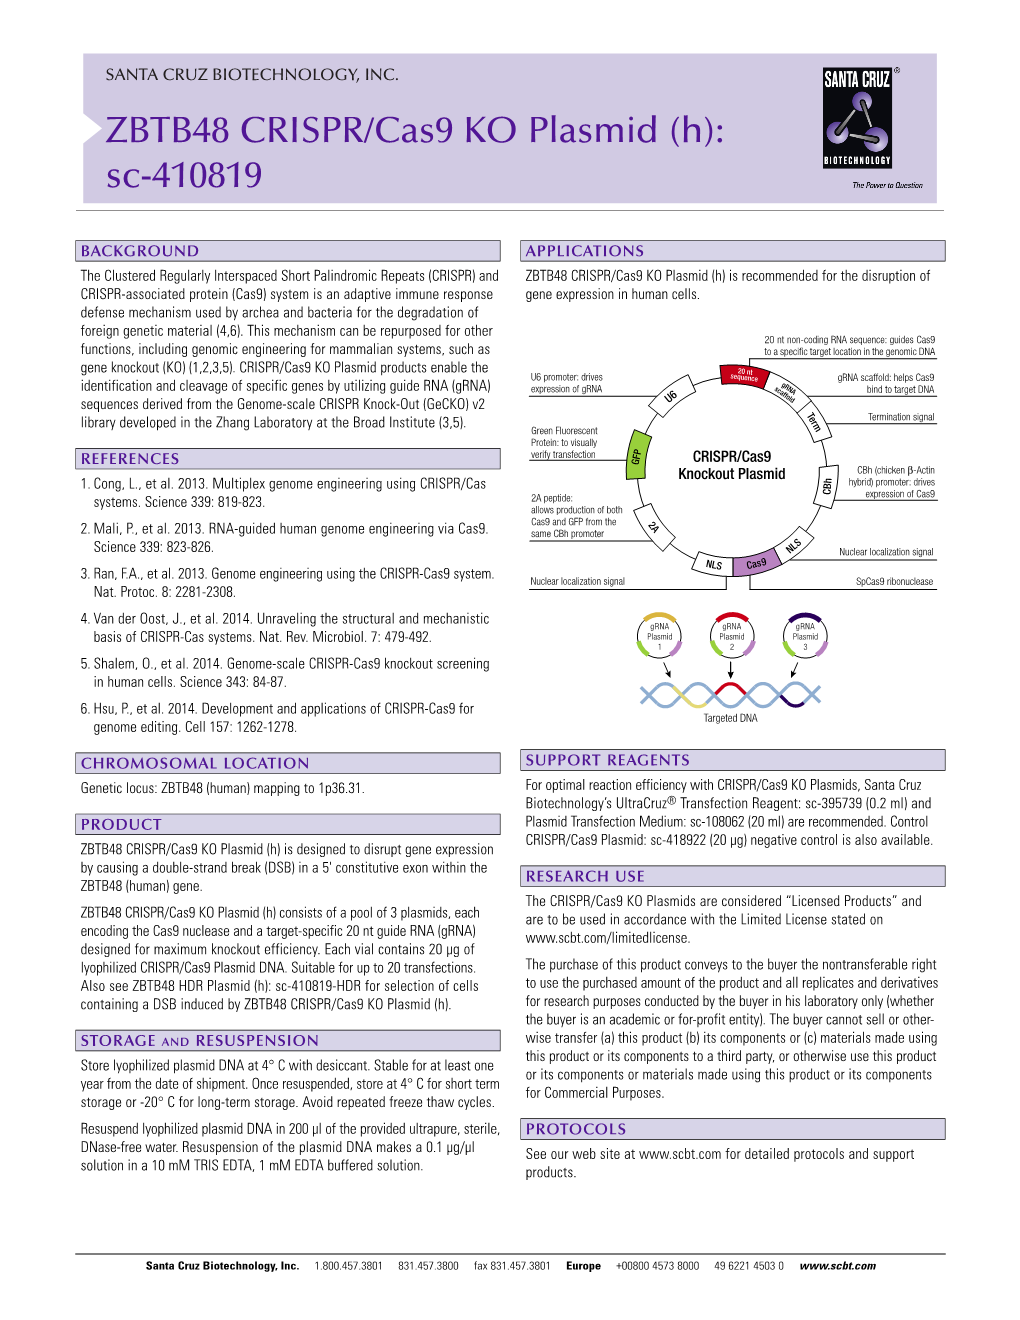 ZBTB48 CRISPR/Cas9 KO Plasmid (H): Sc-410819